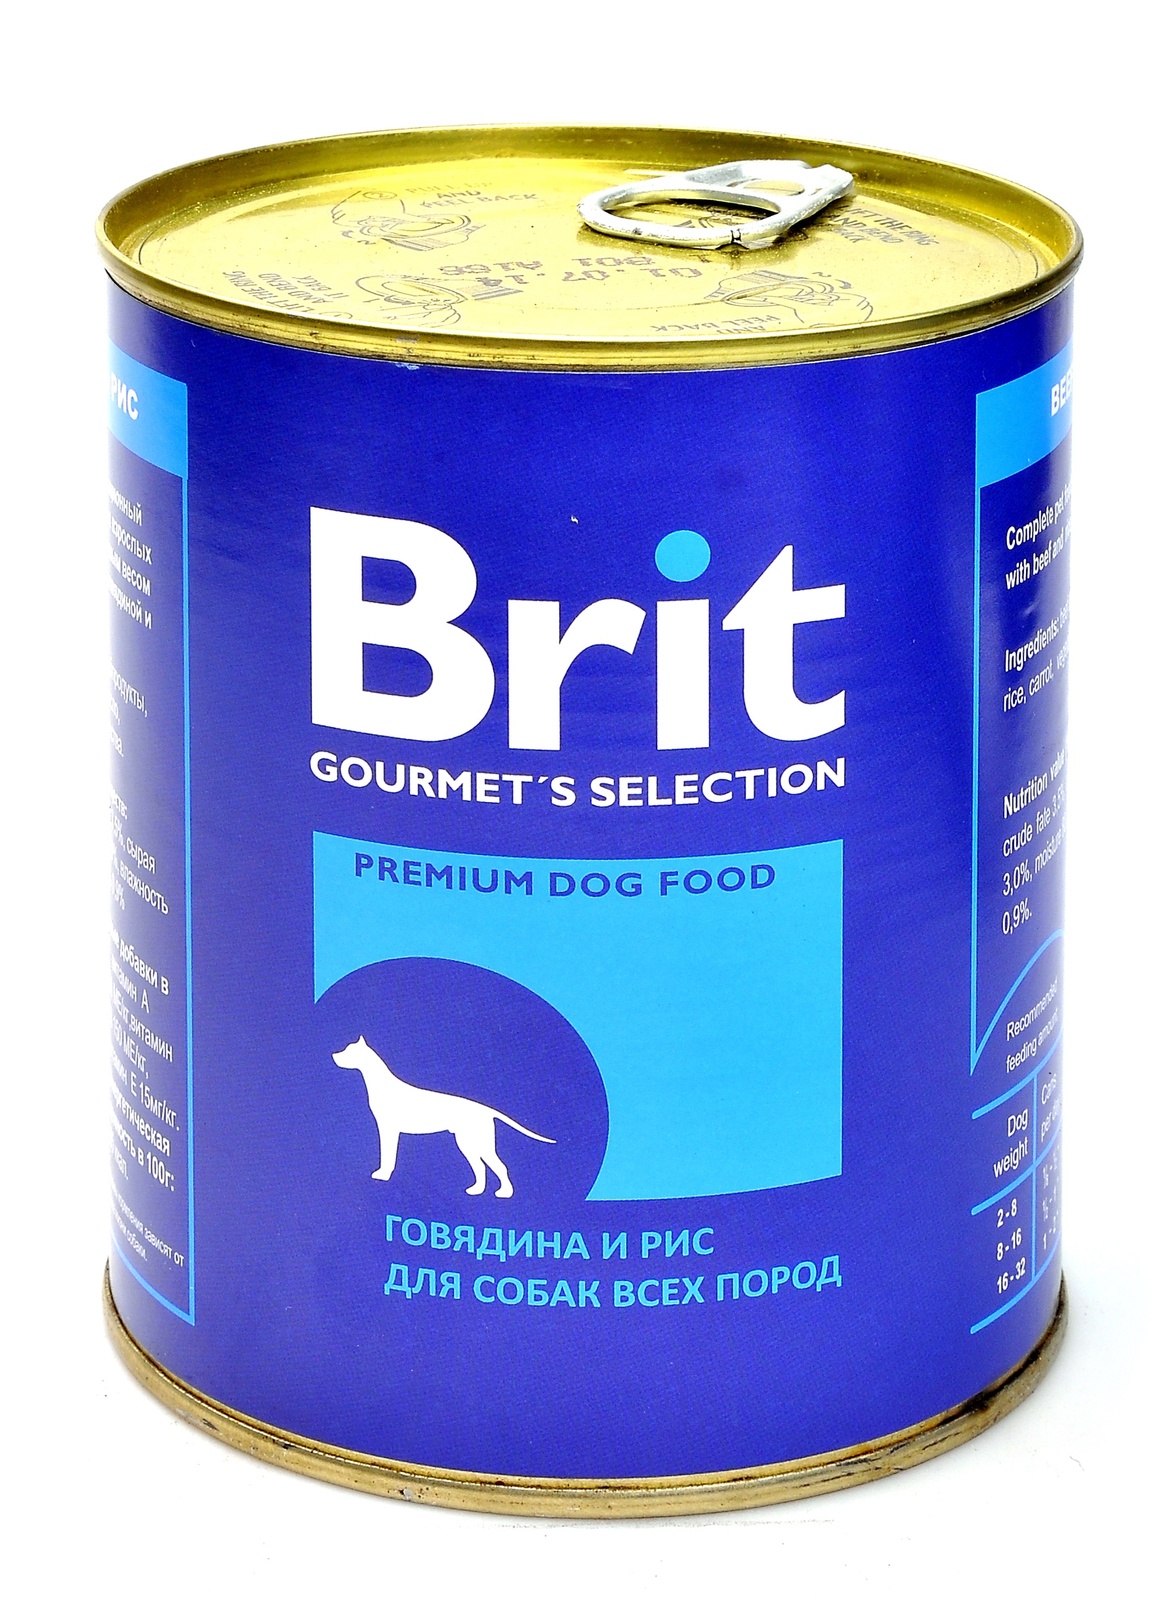 Корм для собак говядина с рисом. Корм для собак консервы 850 г. Brit консервы для собак. Консервы для собак всех пород Brit говядина и сердце, 850г. Брит консервы для собак 850гр.